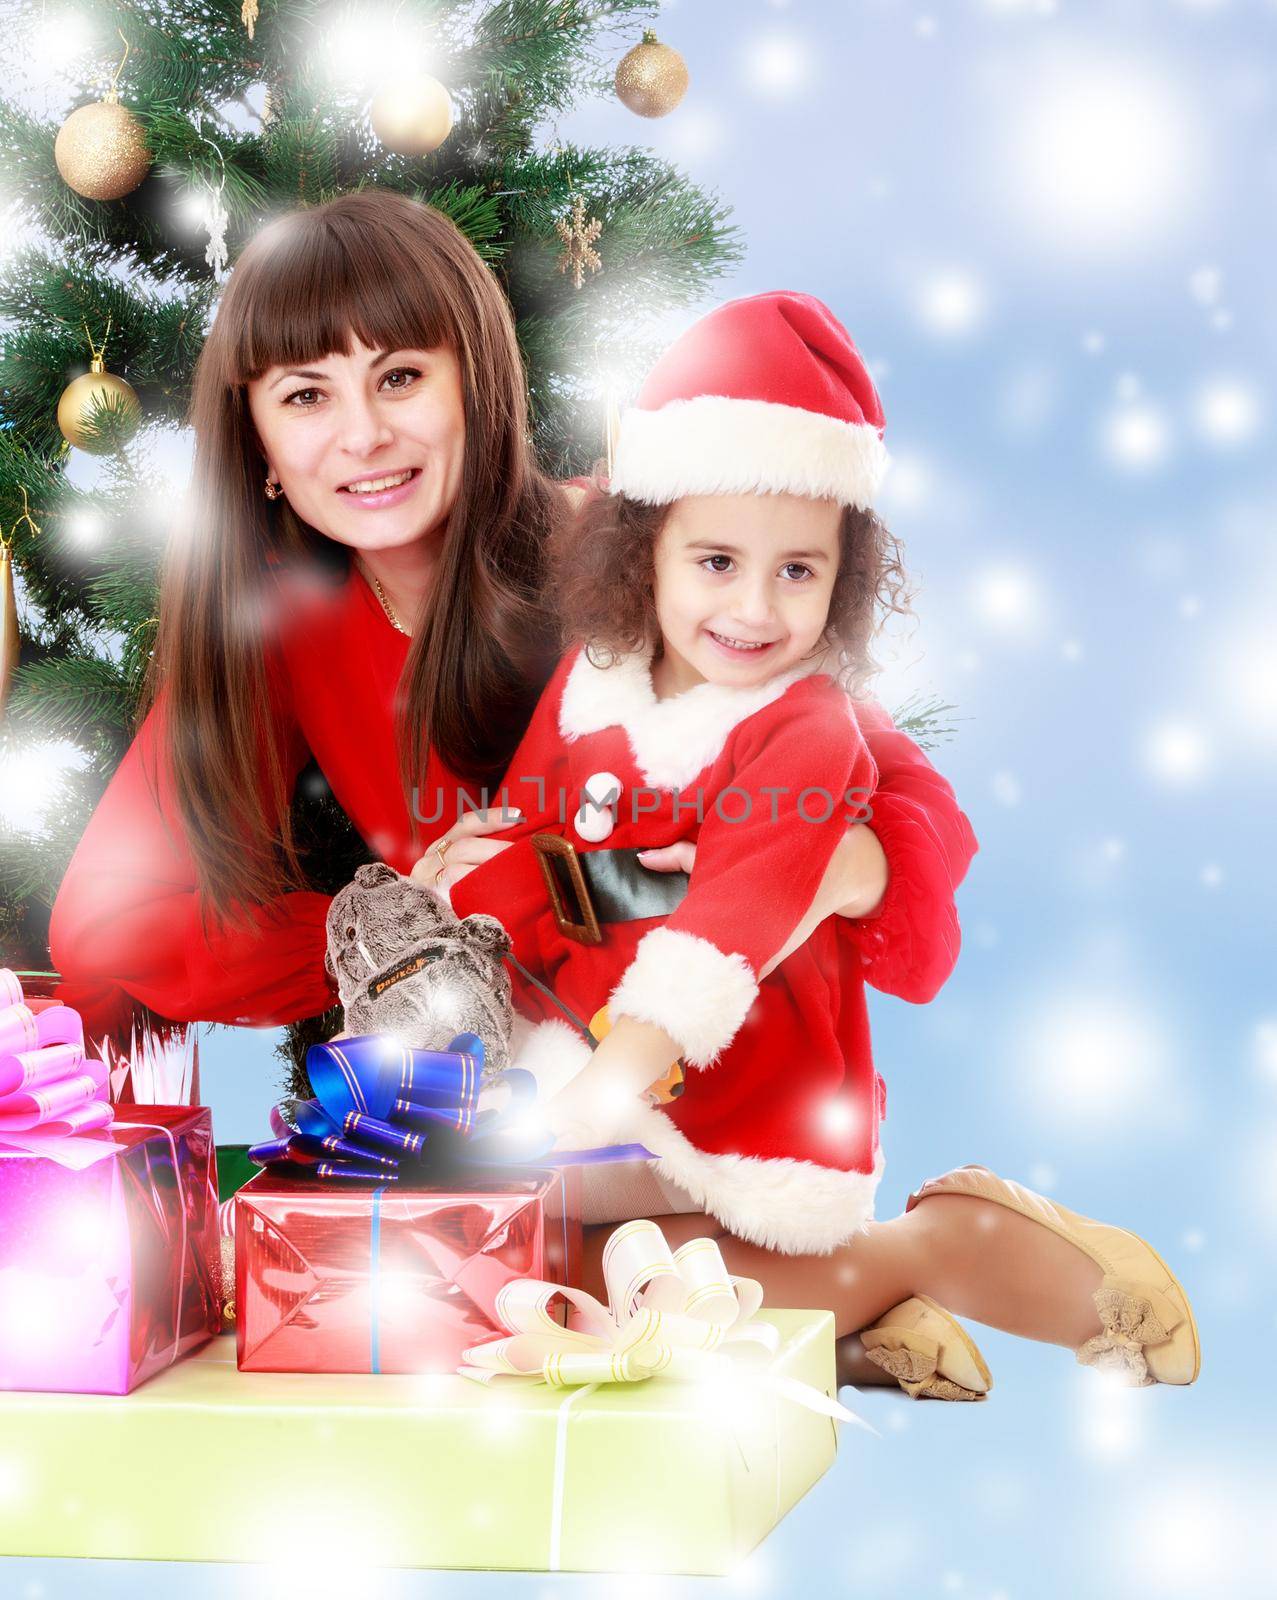 Mother with daughter near the Christmas tree by kolesnikov_studio